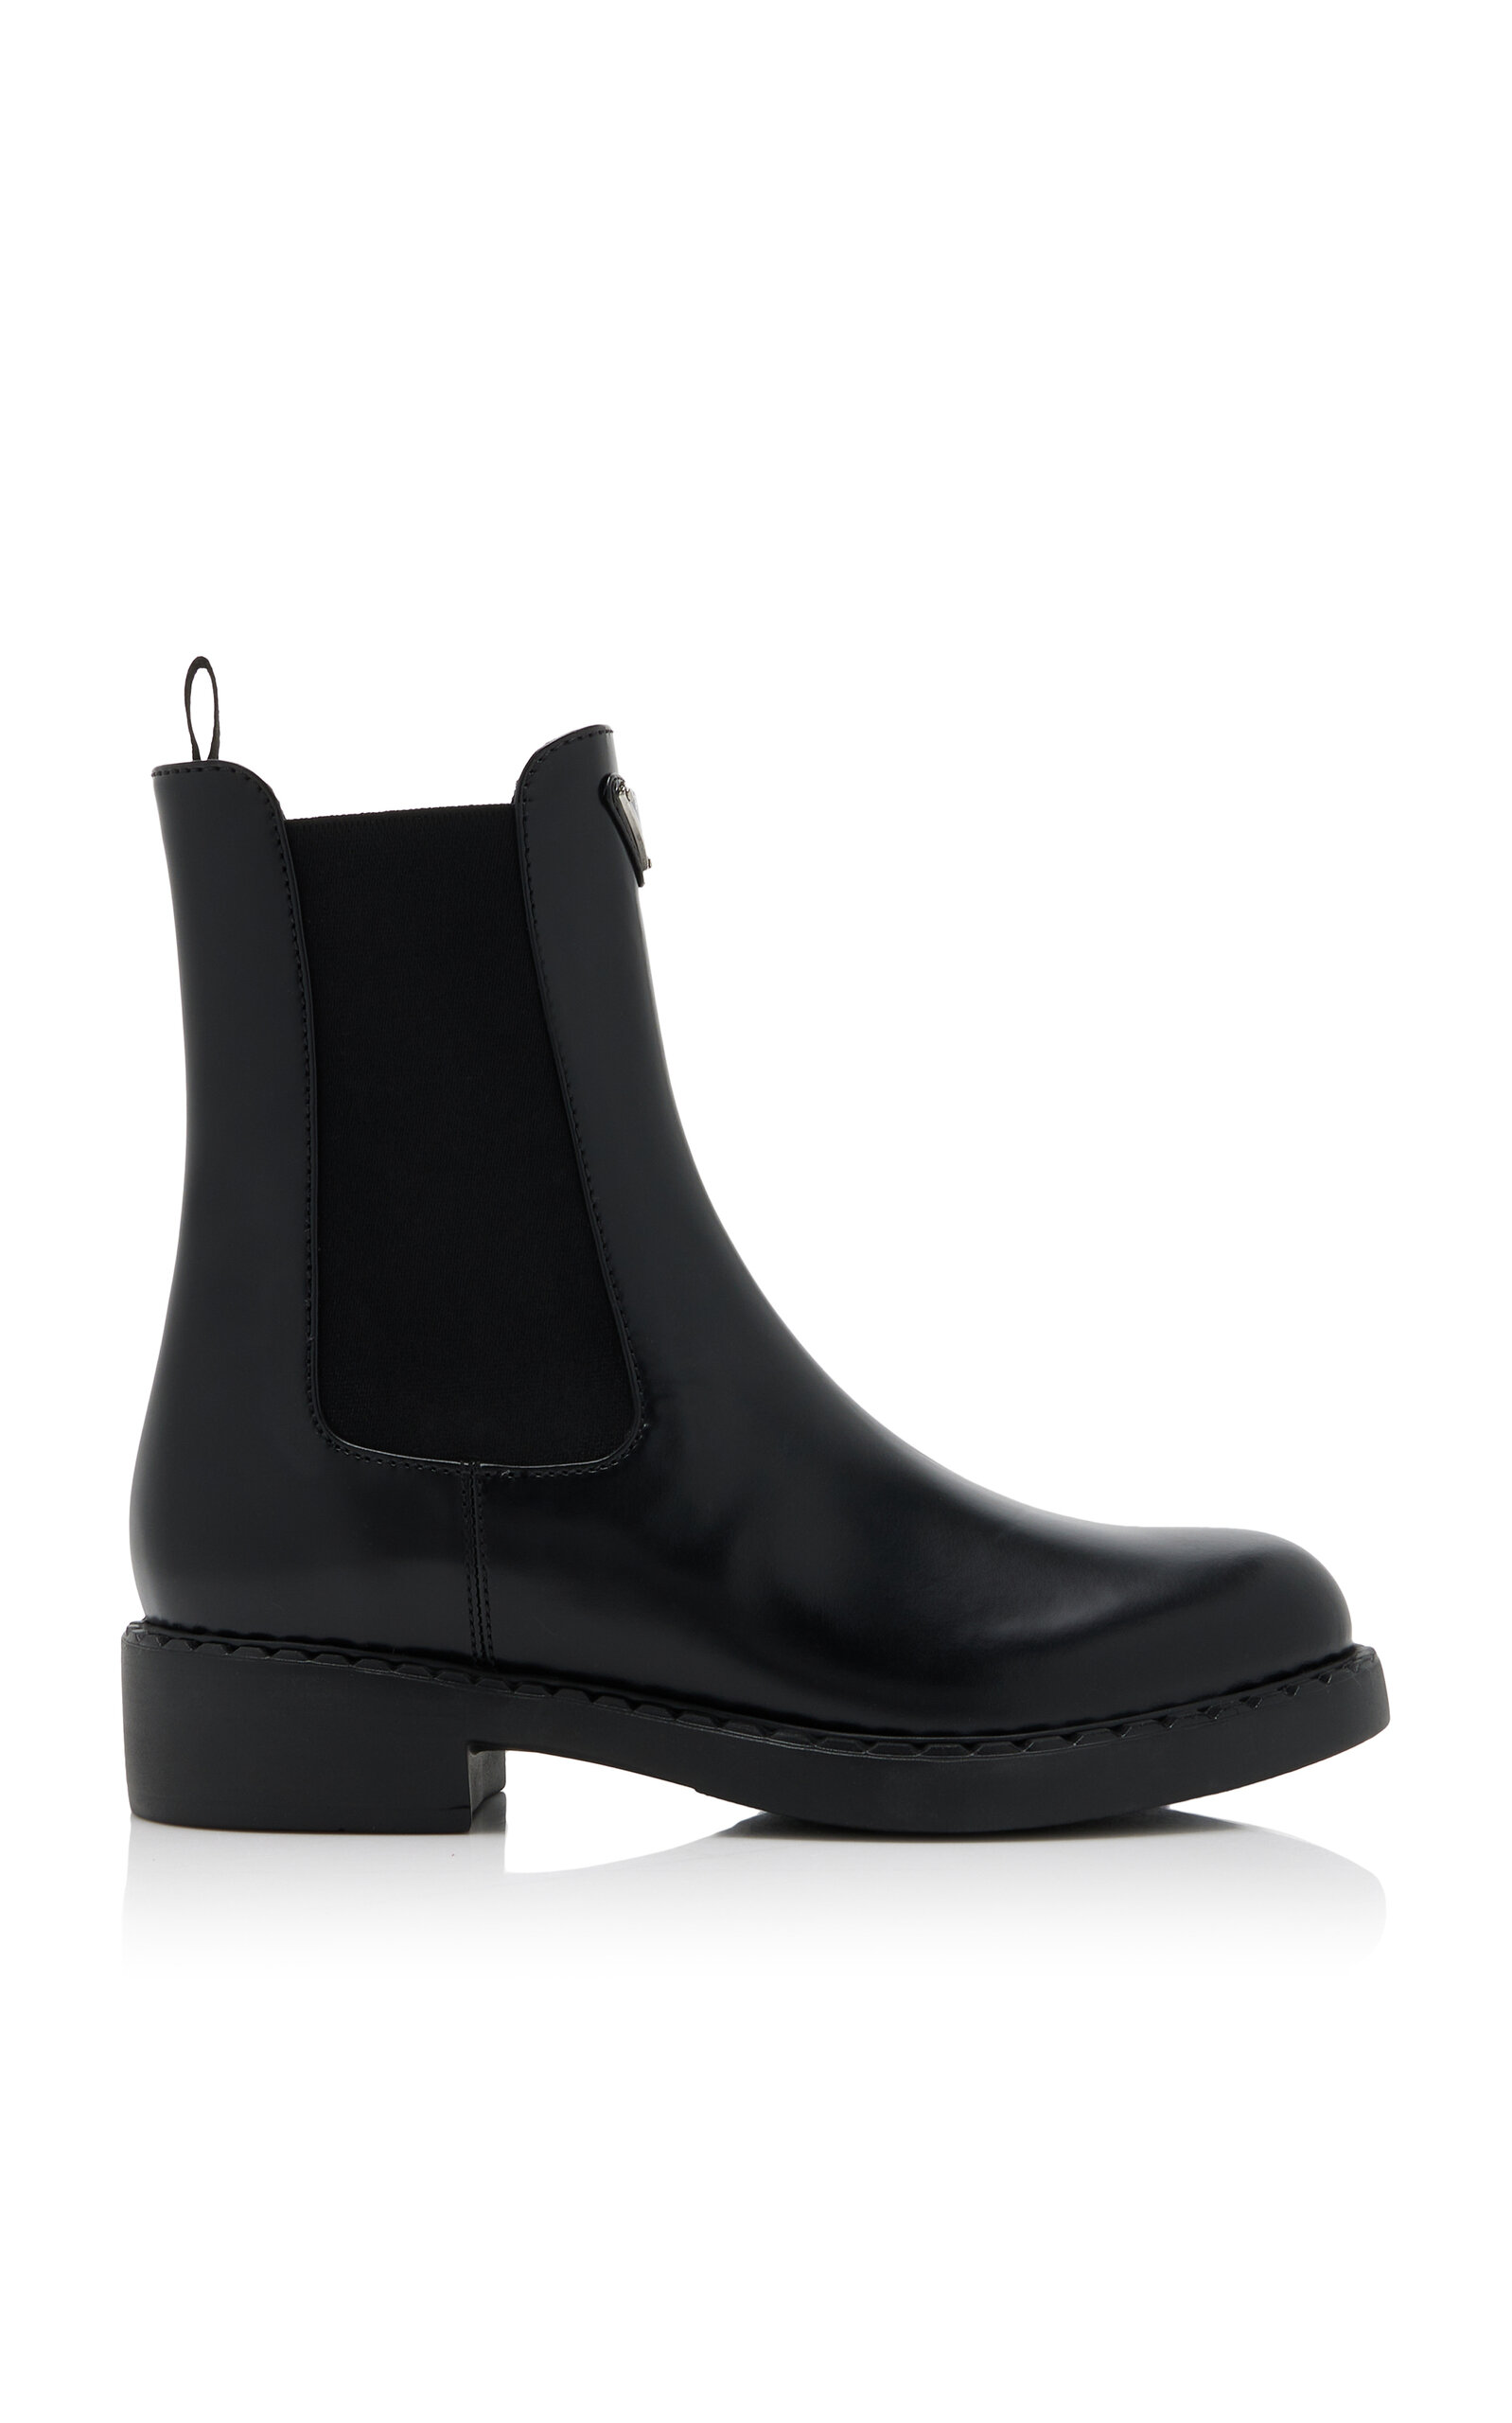 Prada - Leather Chelsea Boots - Black - IT 36 - Moda Operandi